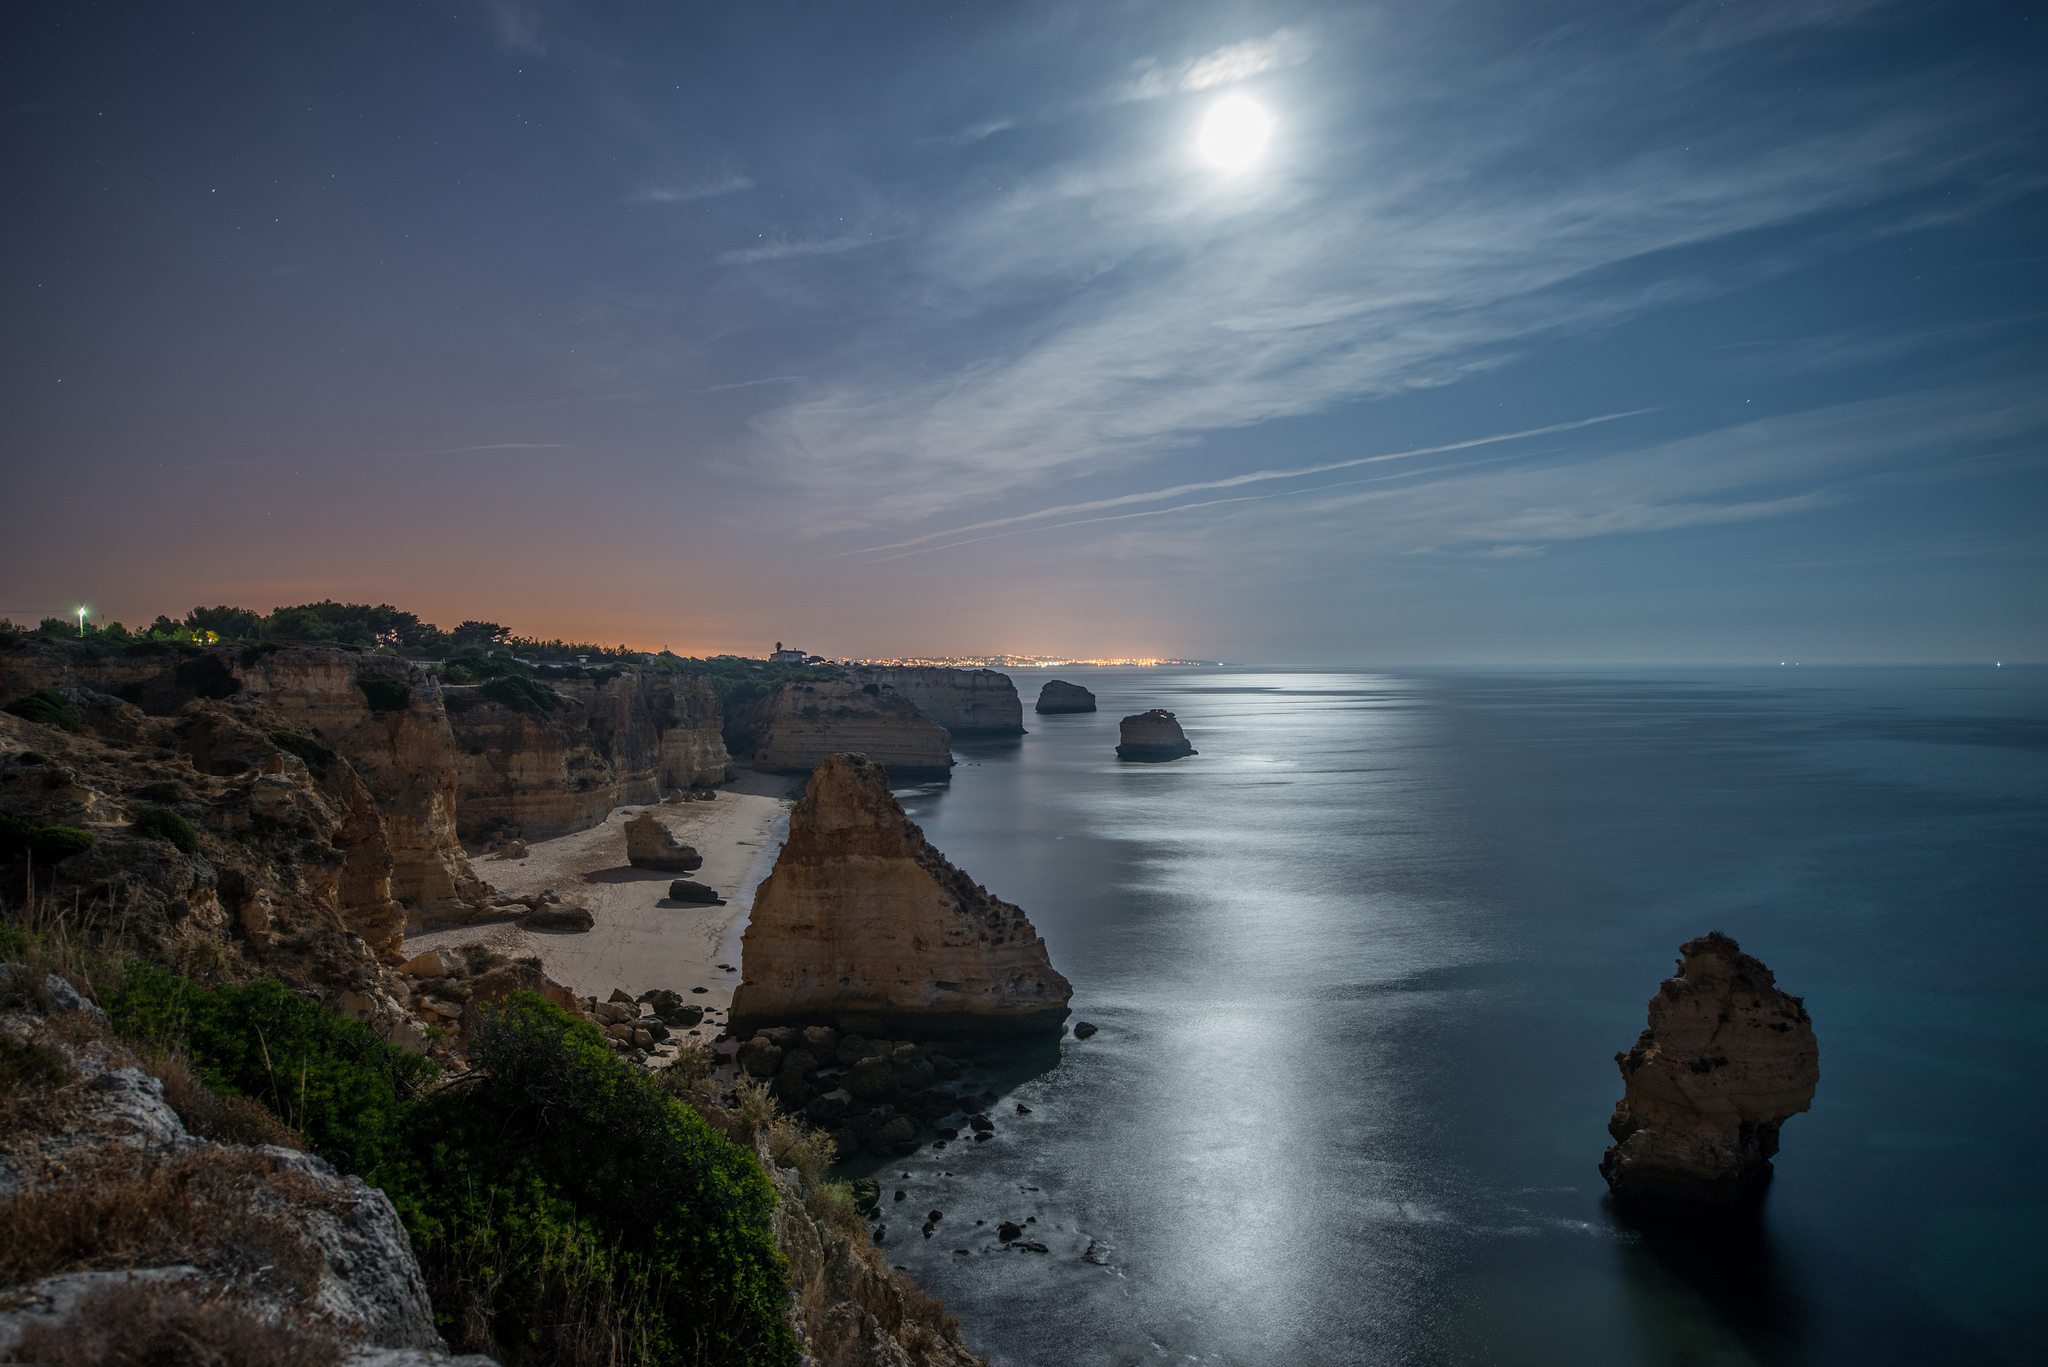 General 2048x1367 night sea Moon moonlight reflection rocks shore Praia da Marinha Portugal full moon